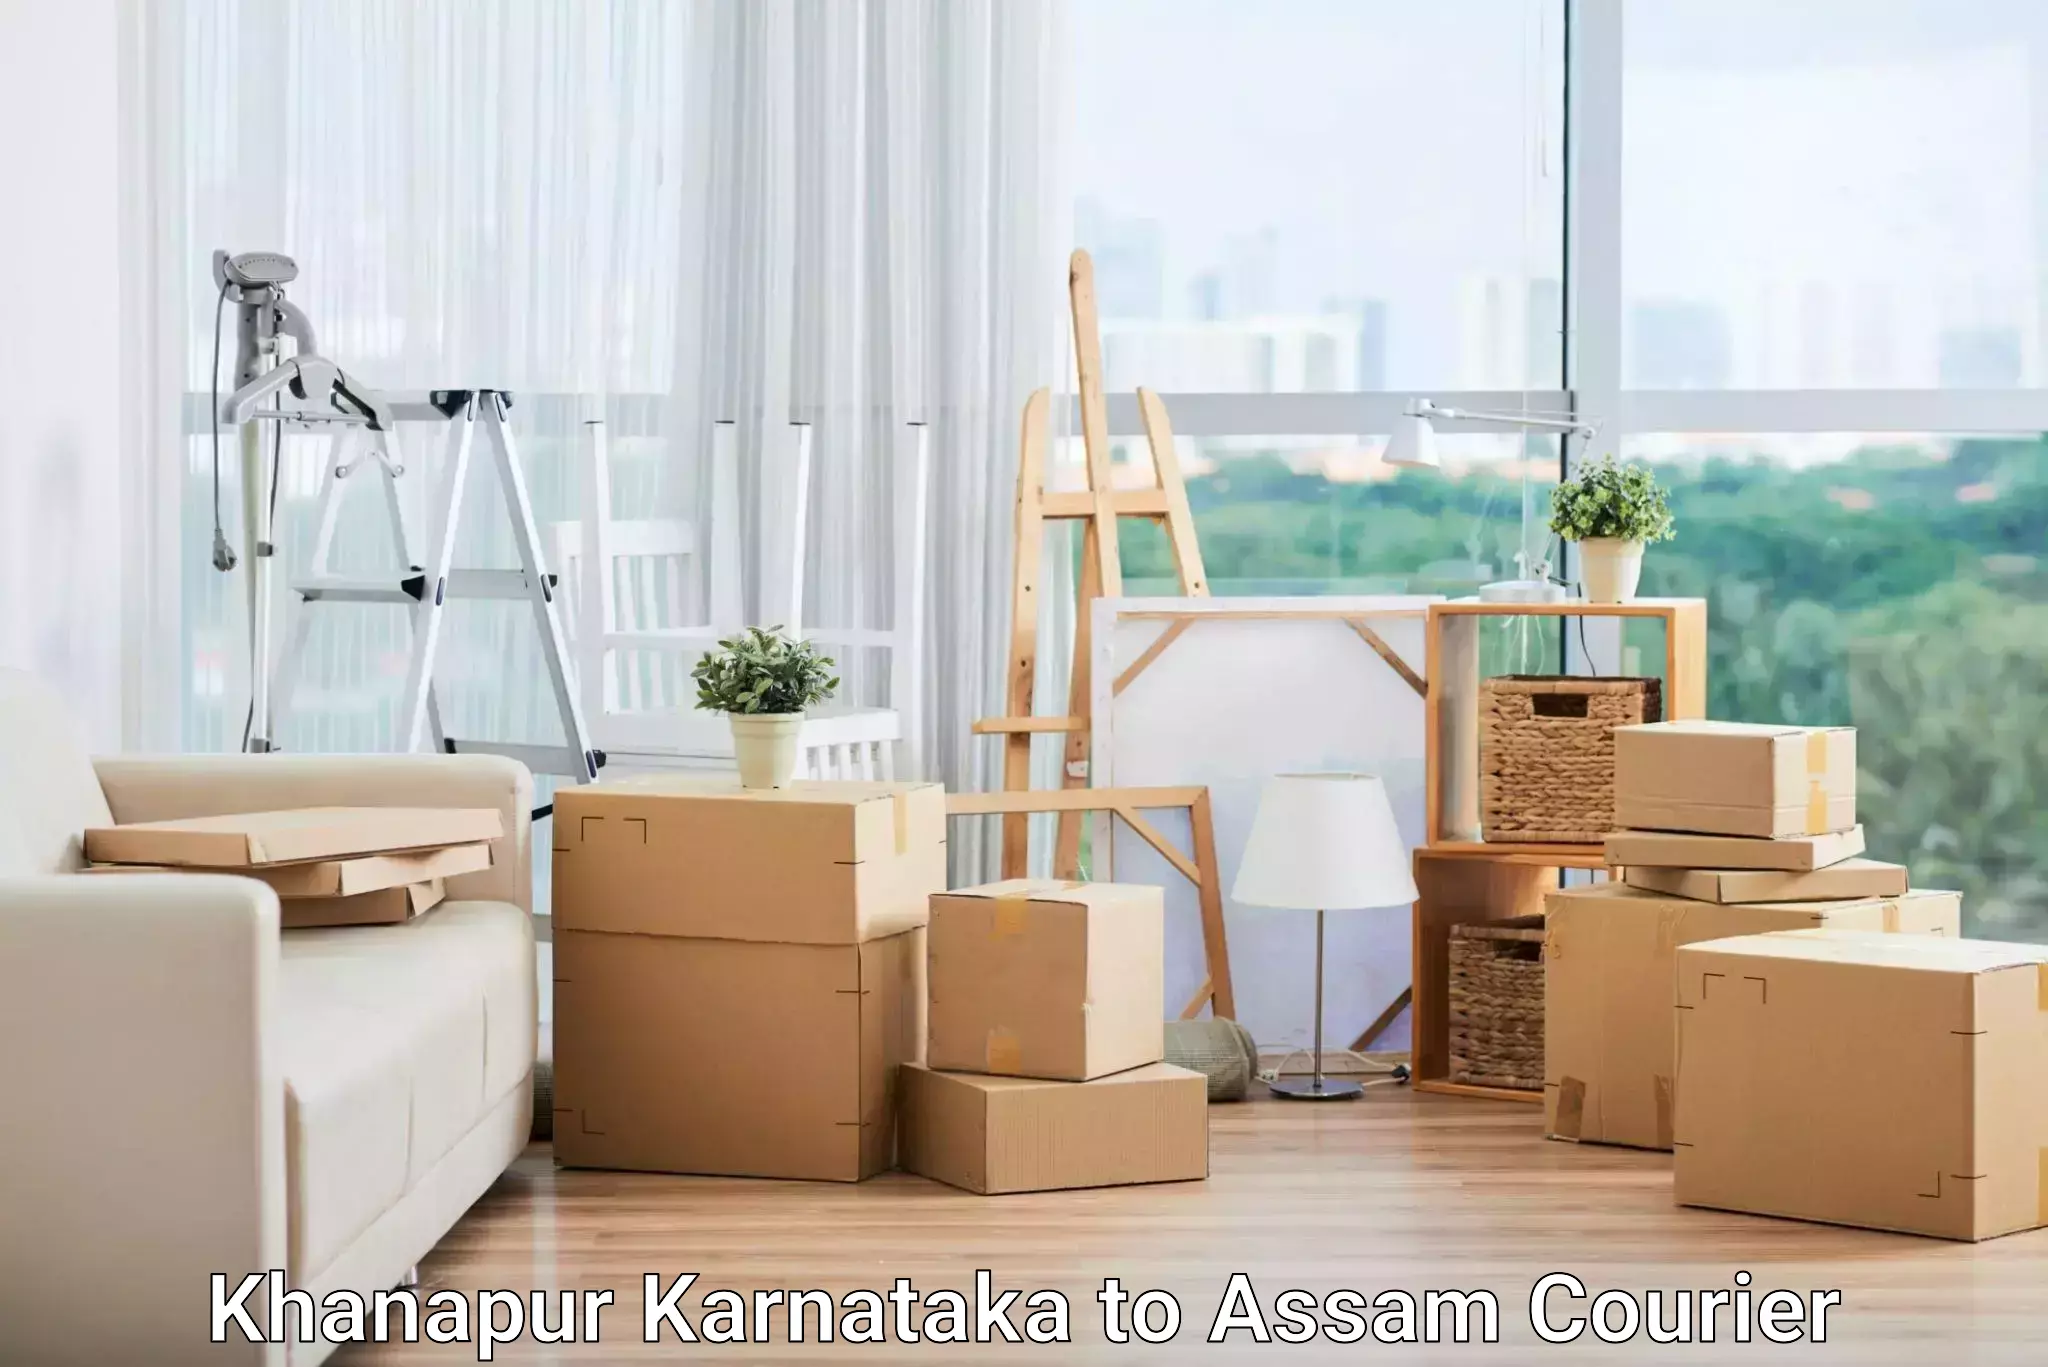 Logistics service provider Khanapur Karnataka to Assam